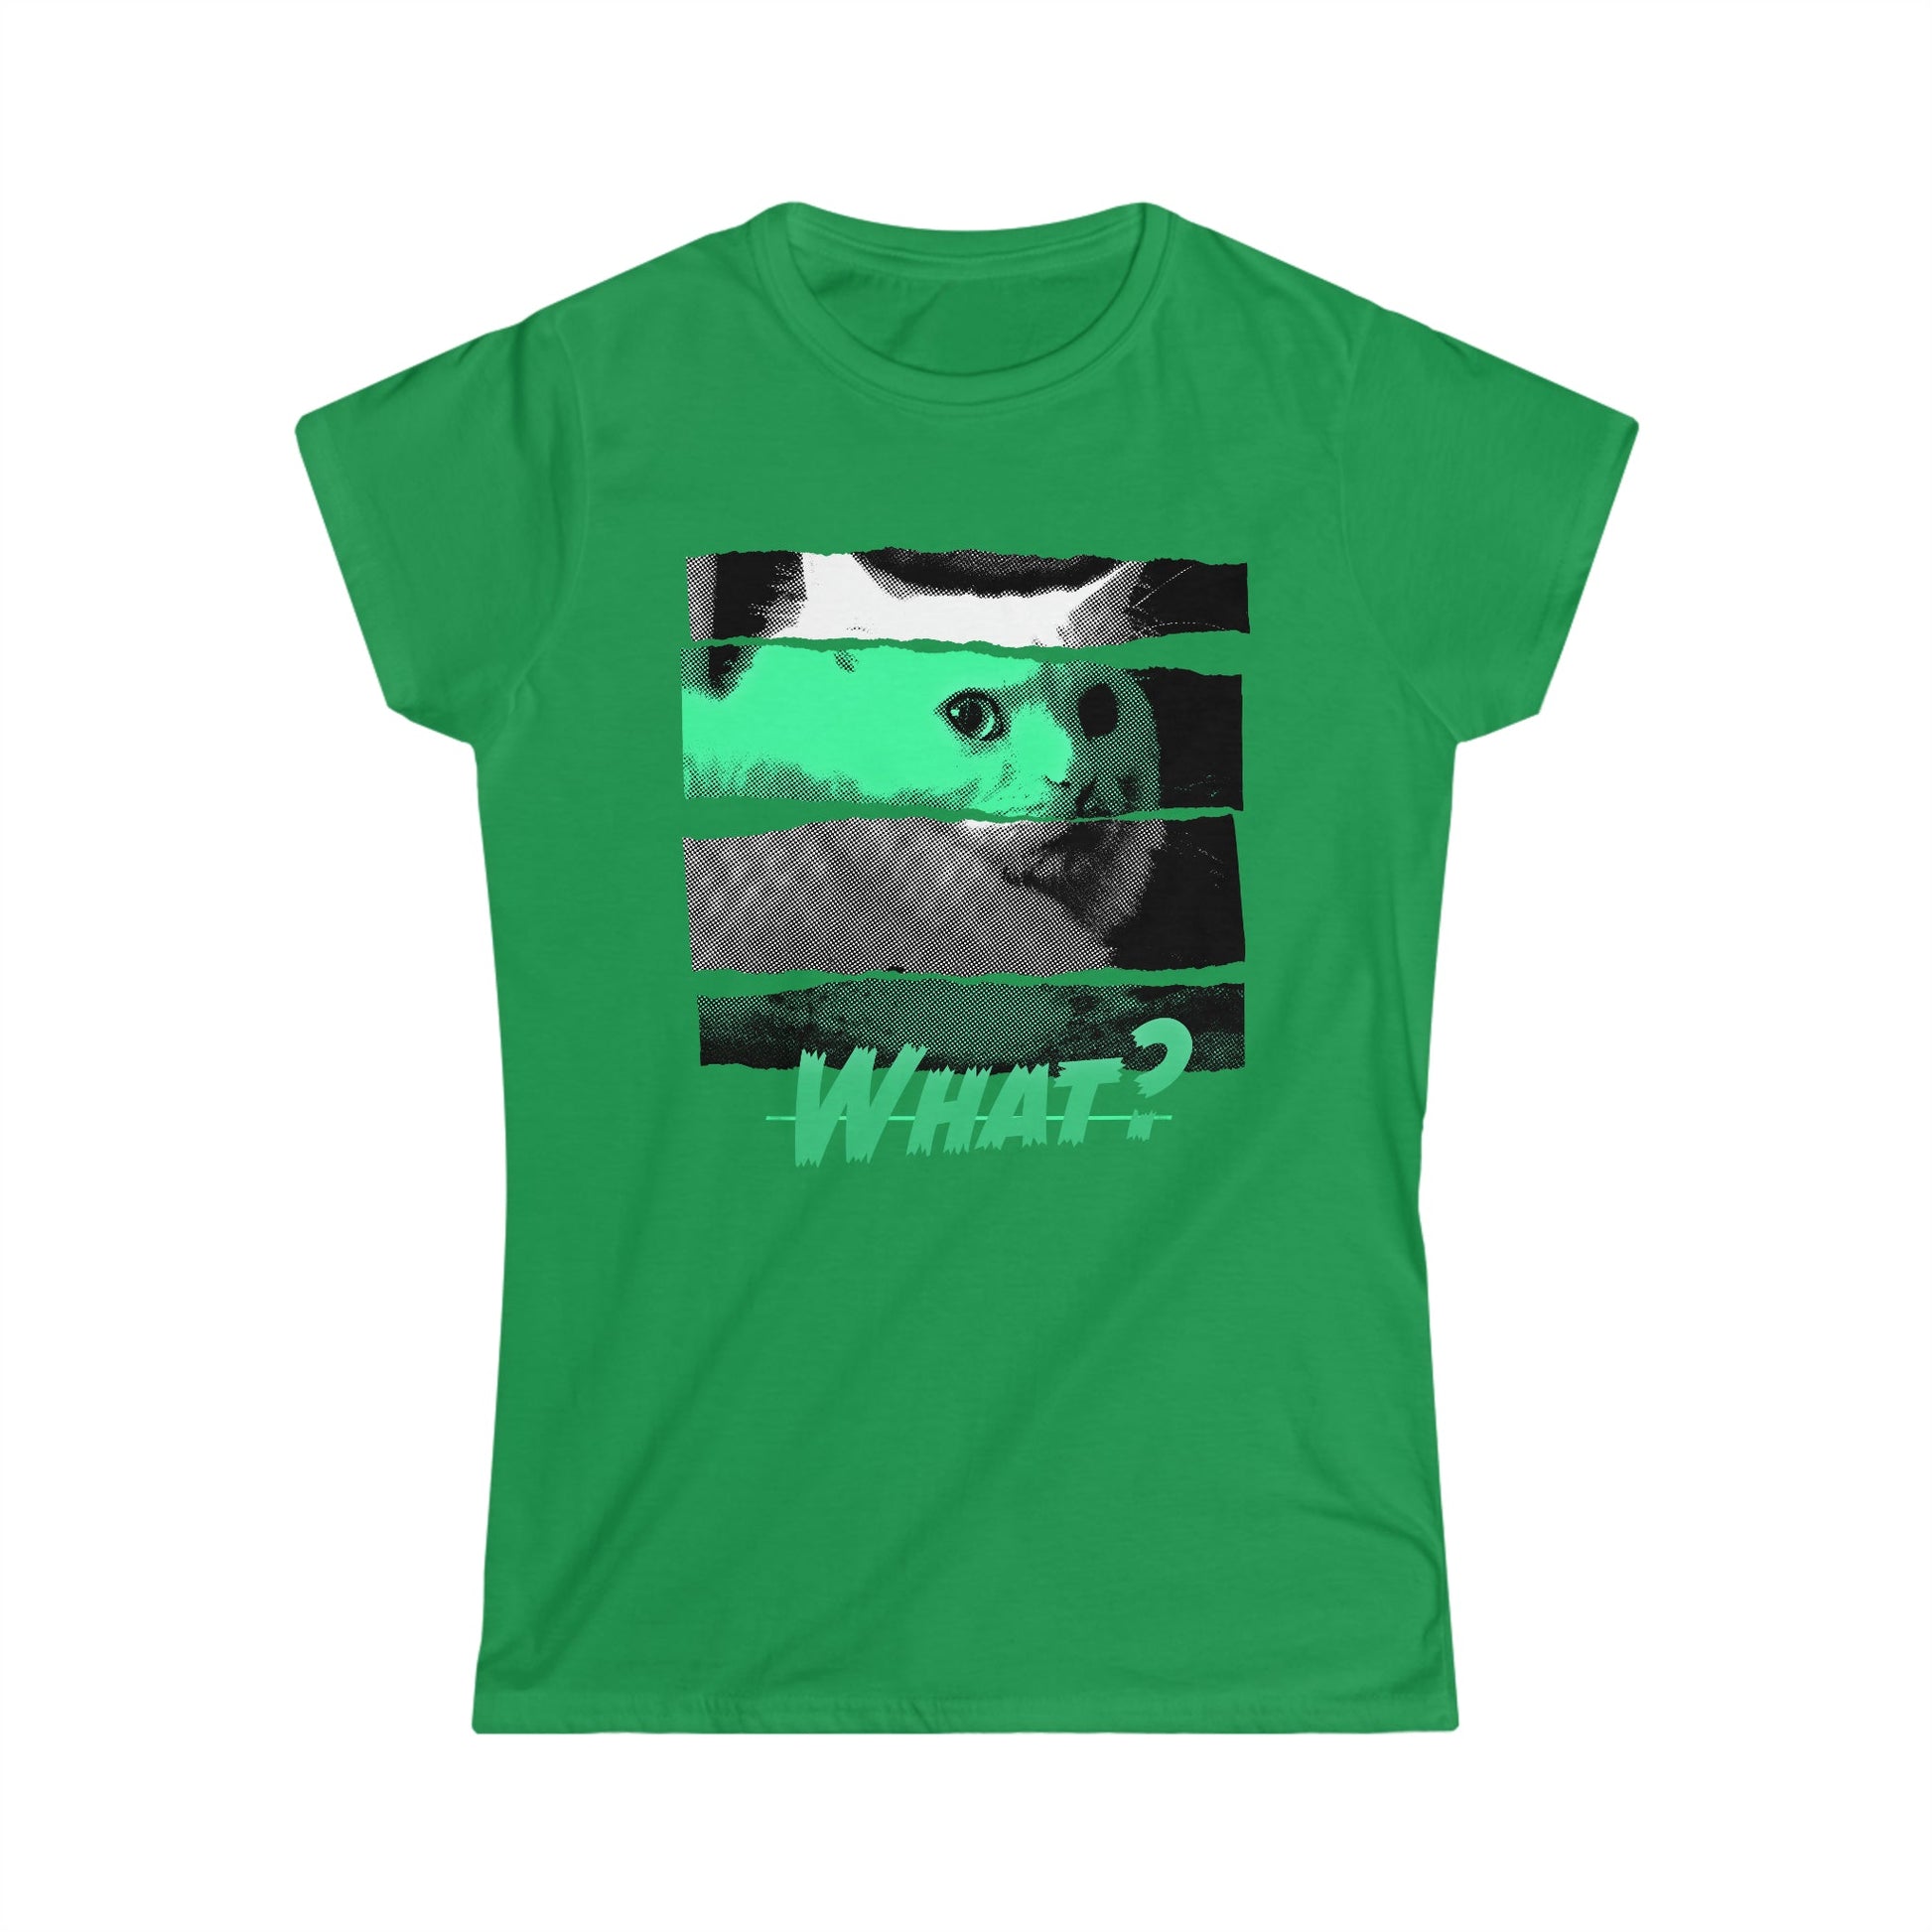 CrazyYetiClothing, CYC, WHAT? (Women's Softstyle Tee), T-Shirt